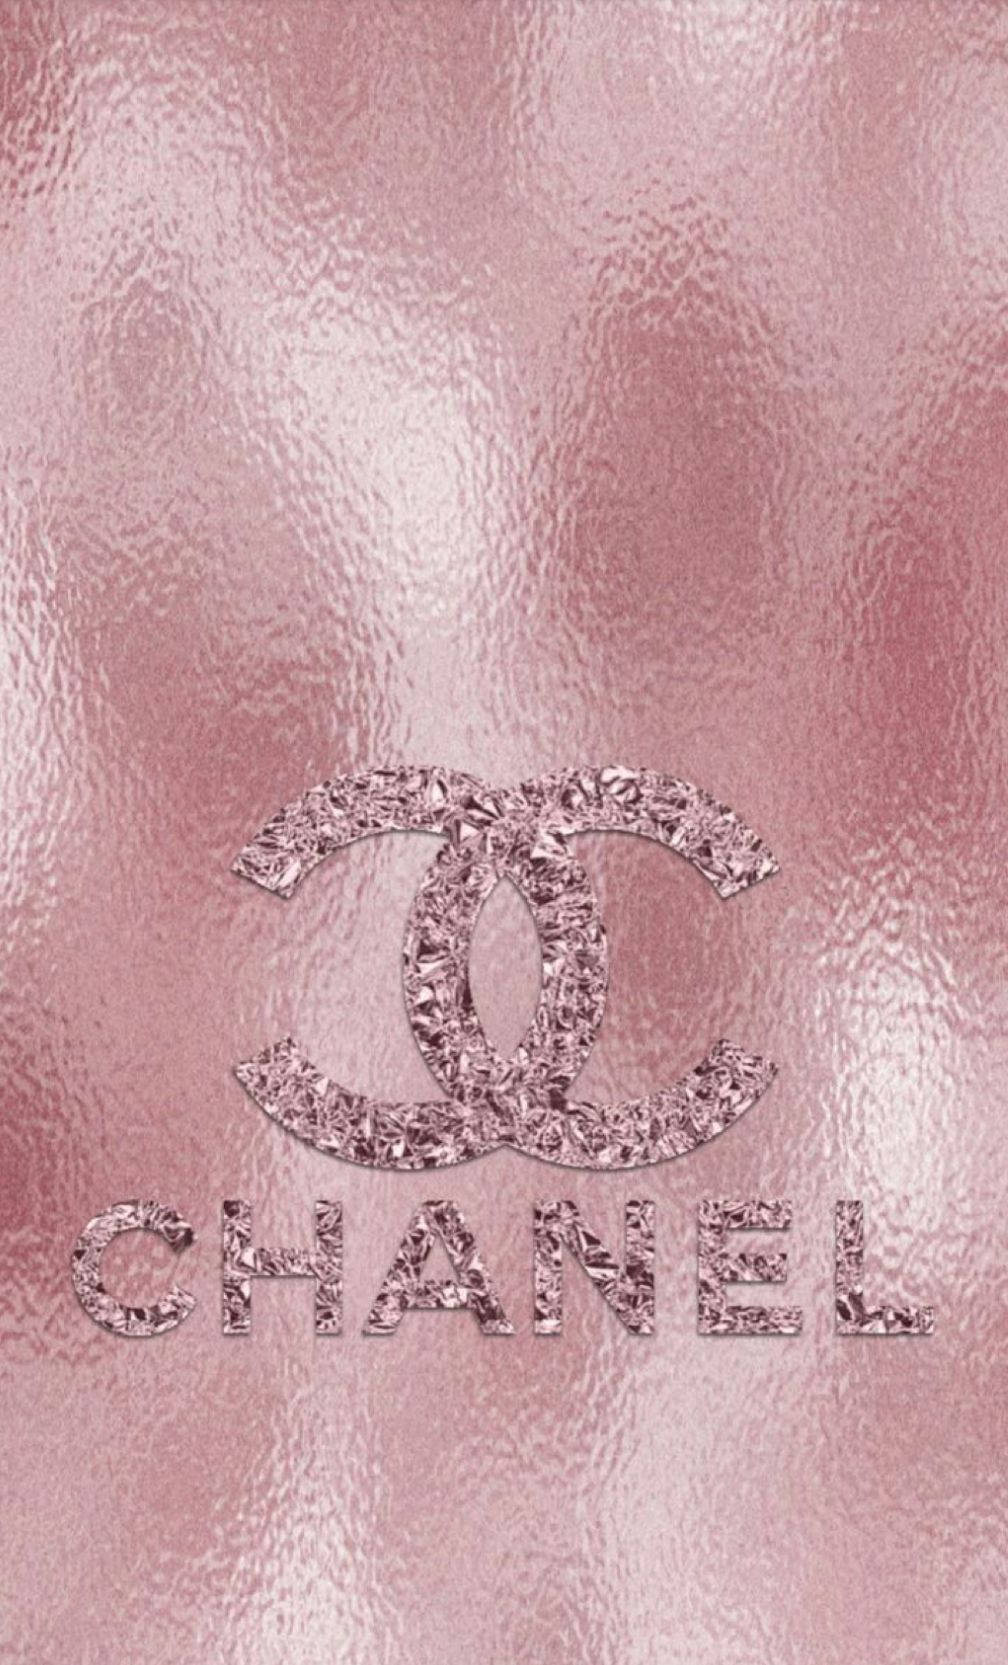 Chanellogotypen På En Rosa Bakgrund. Wallpaper